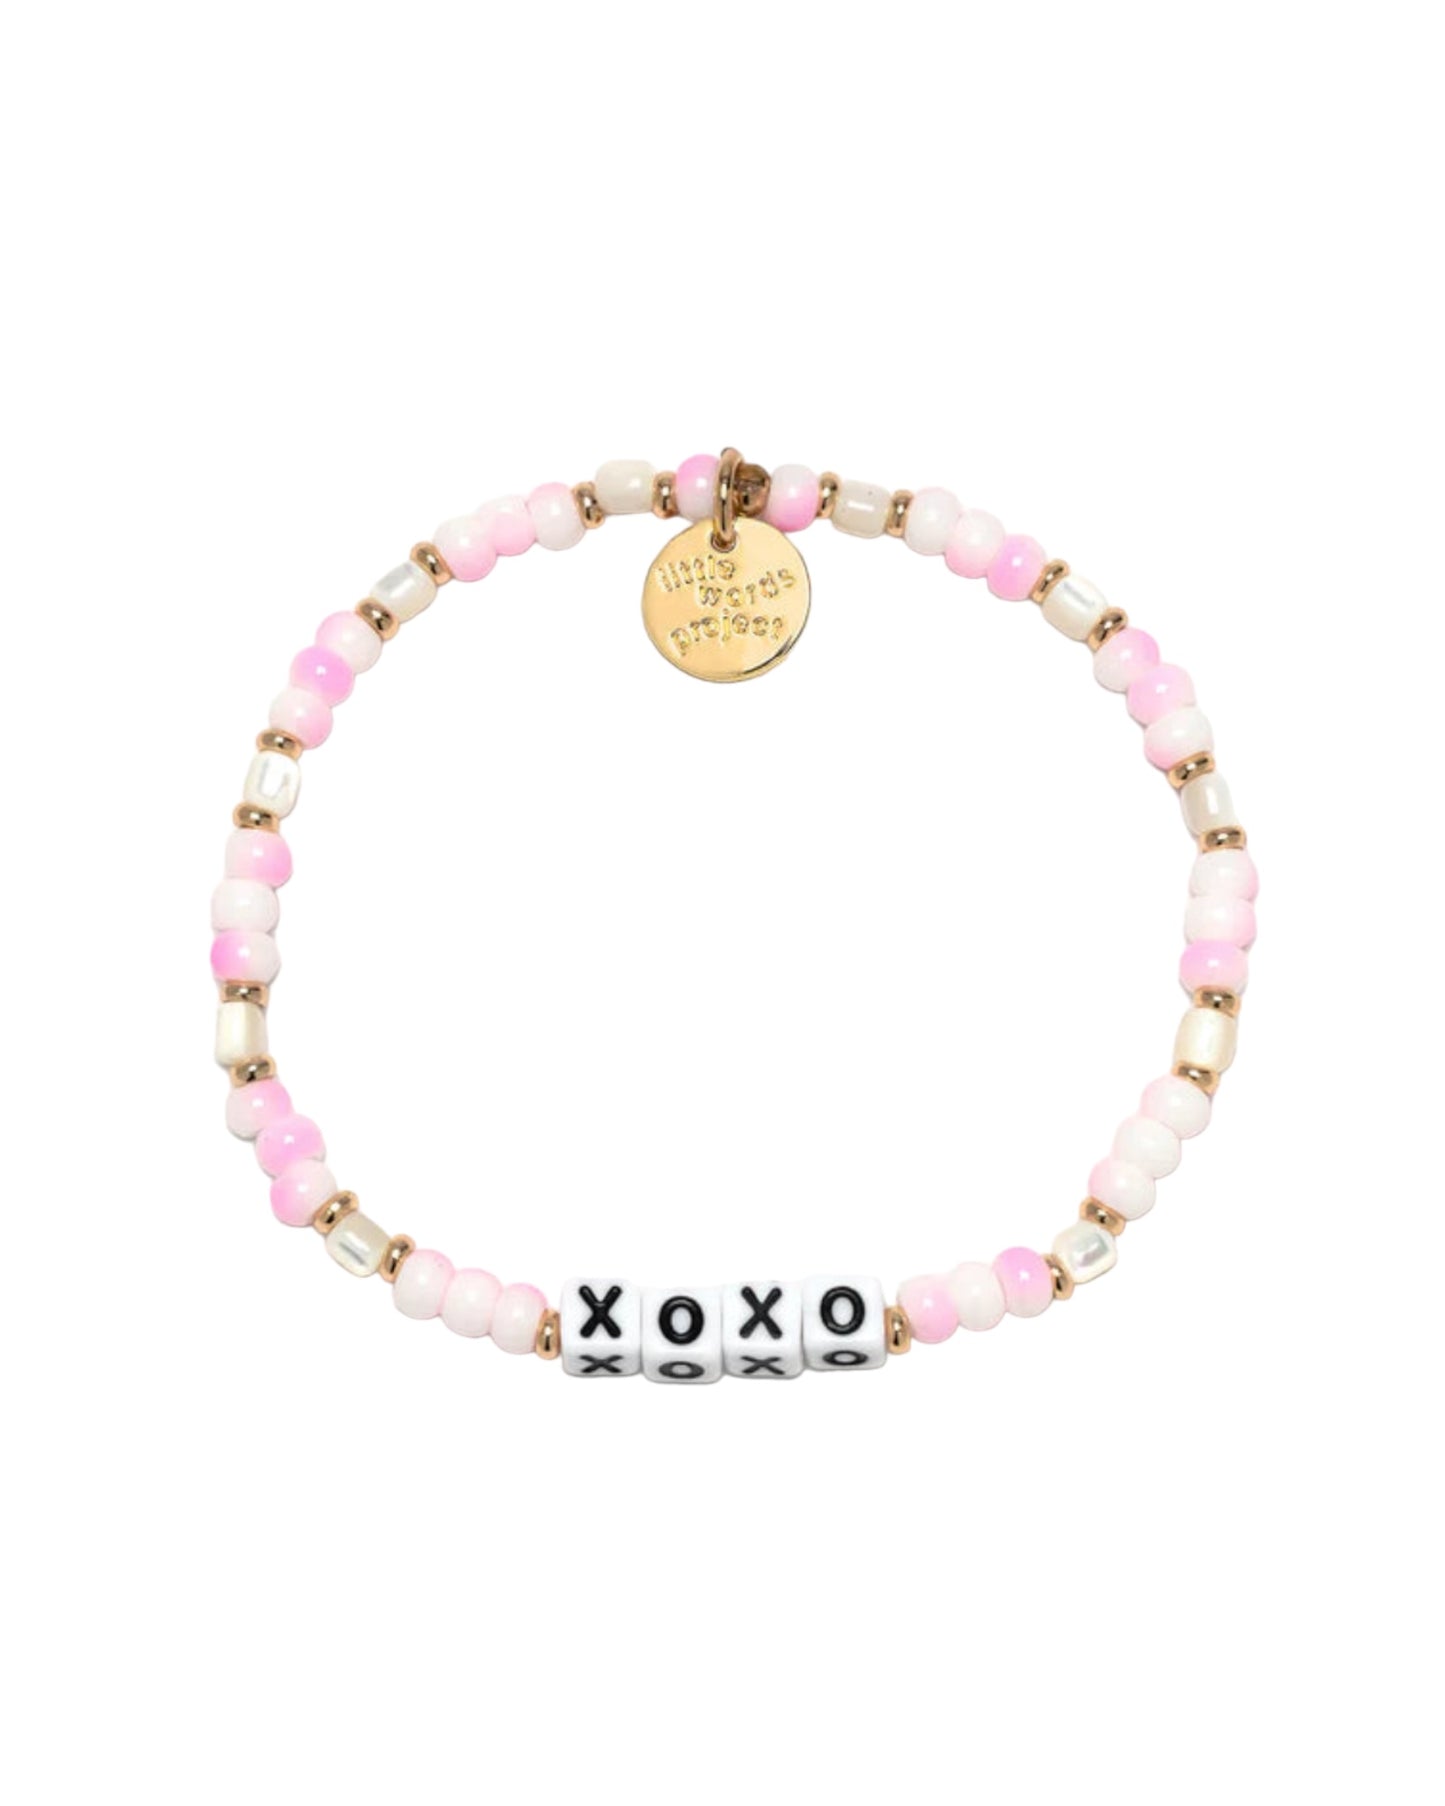 Little Words Project XOXO - Valentine's Day Bracelet